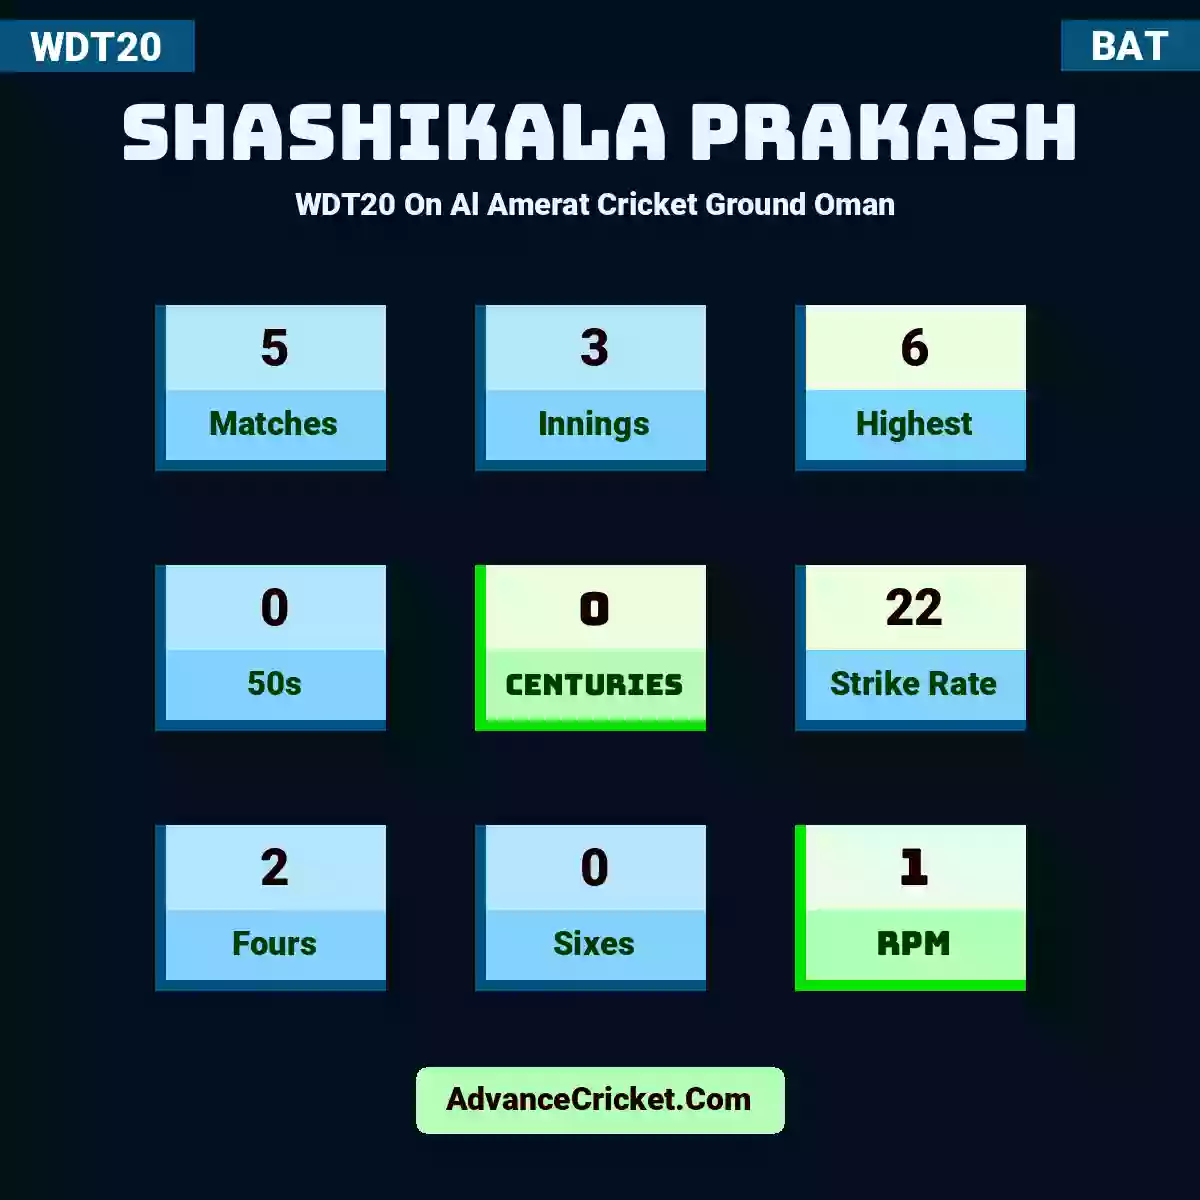 Shashikala Prakash WDT20  On Al Amerat Cricket Ground Oman , Shashikala Prakash played 5 matches, scored 6 runs as highest, 0 half-centuries, and 0 centuries, with a strike rate of 22. S.Prakash hit 2 fours and 0 sixes, with an RPM of 1.